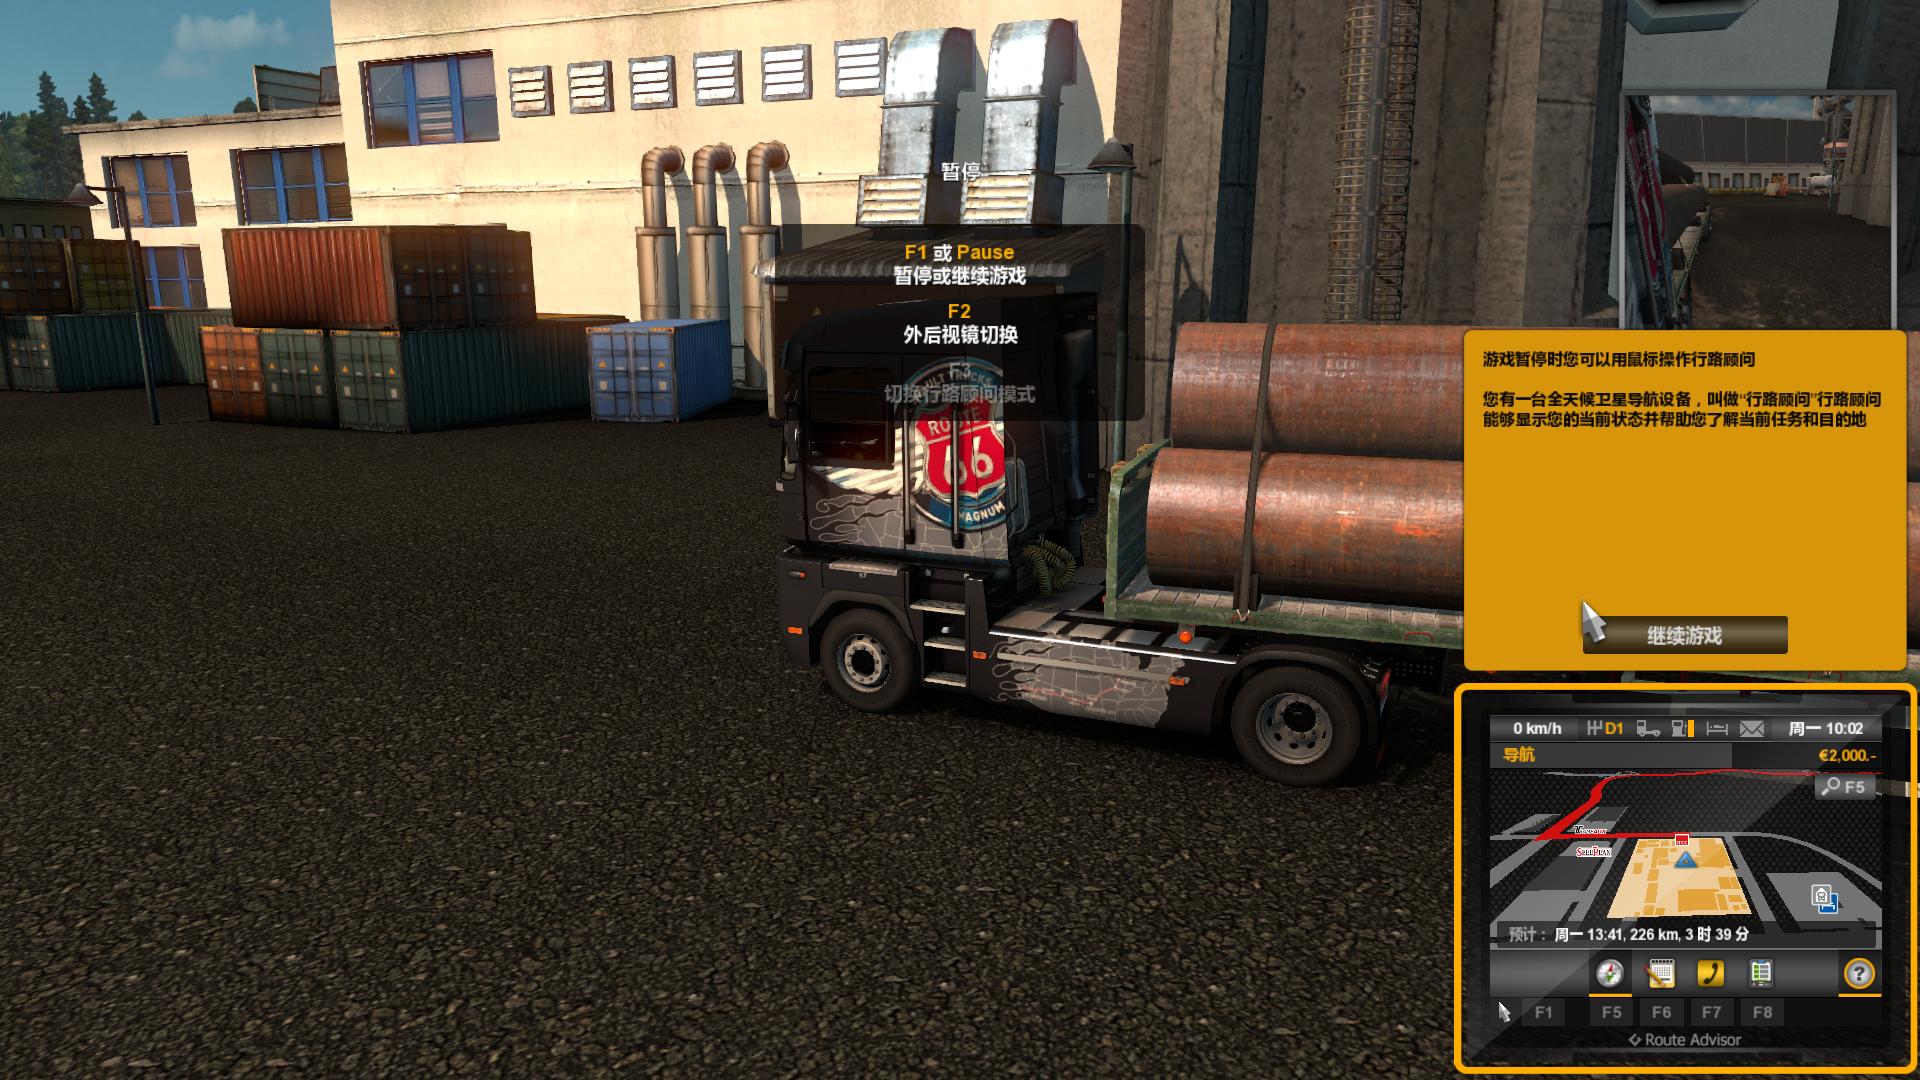 ŷ޿ģ2Euro Truck Simulator 2v1.27ִֶMOD